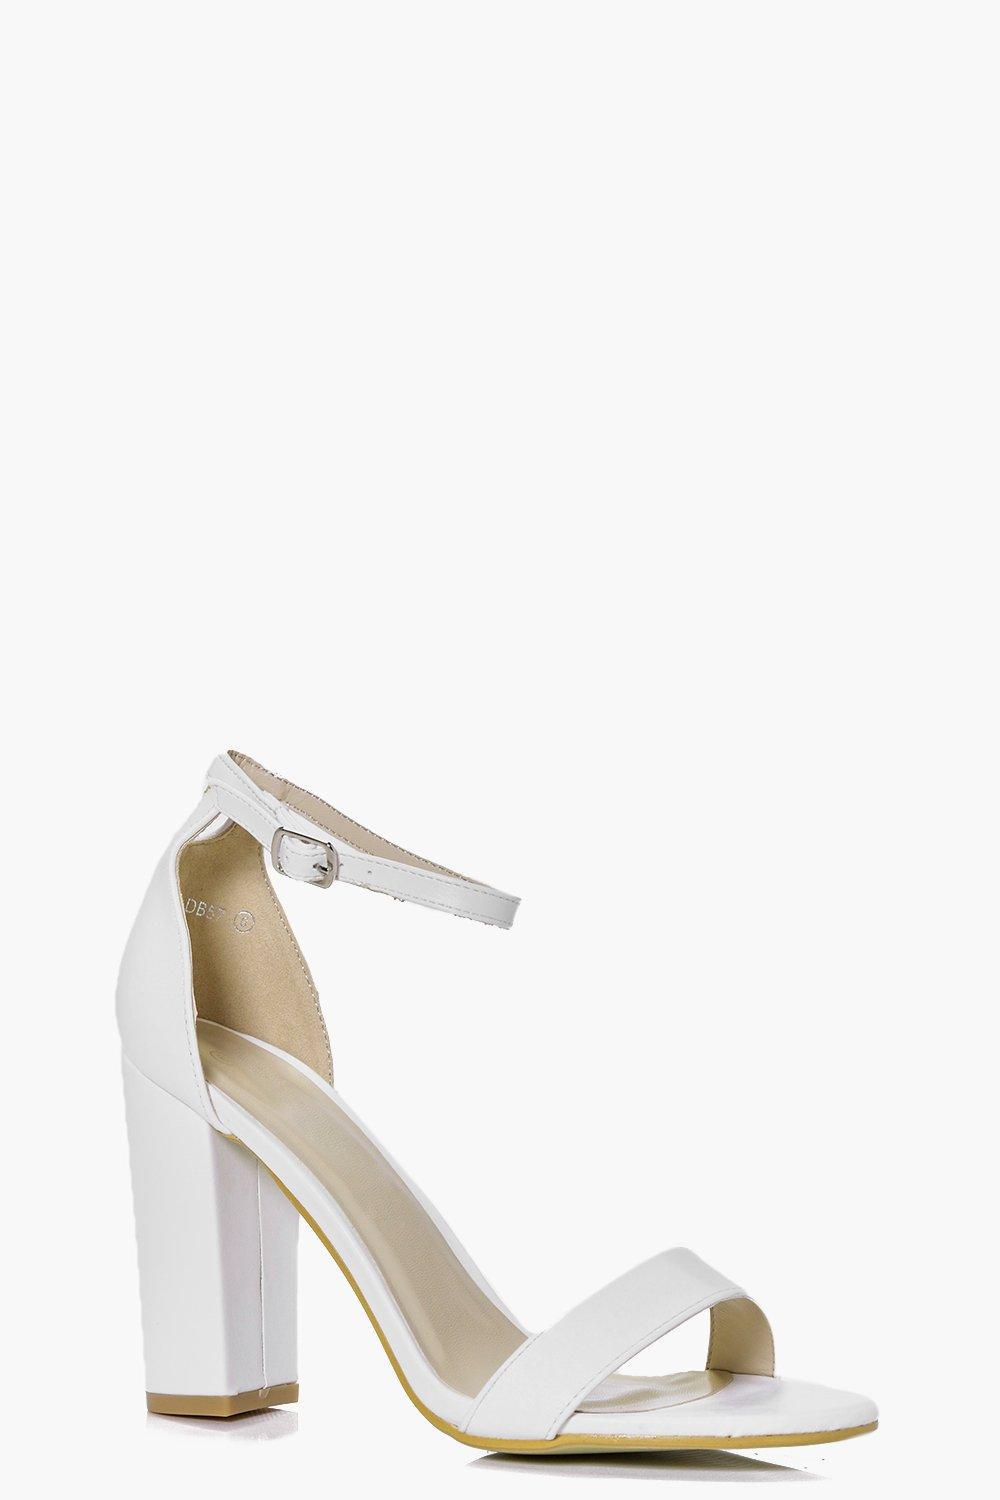 boohoo white heels